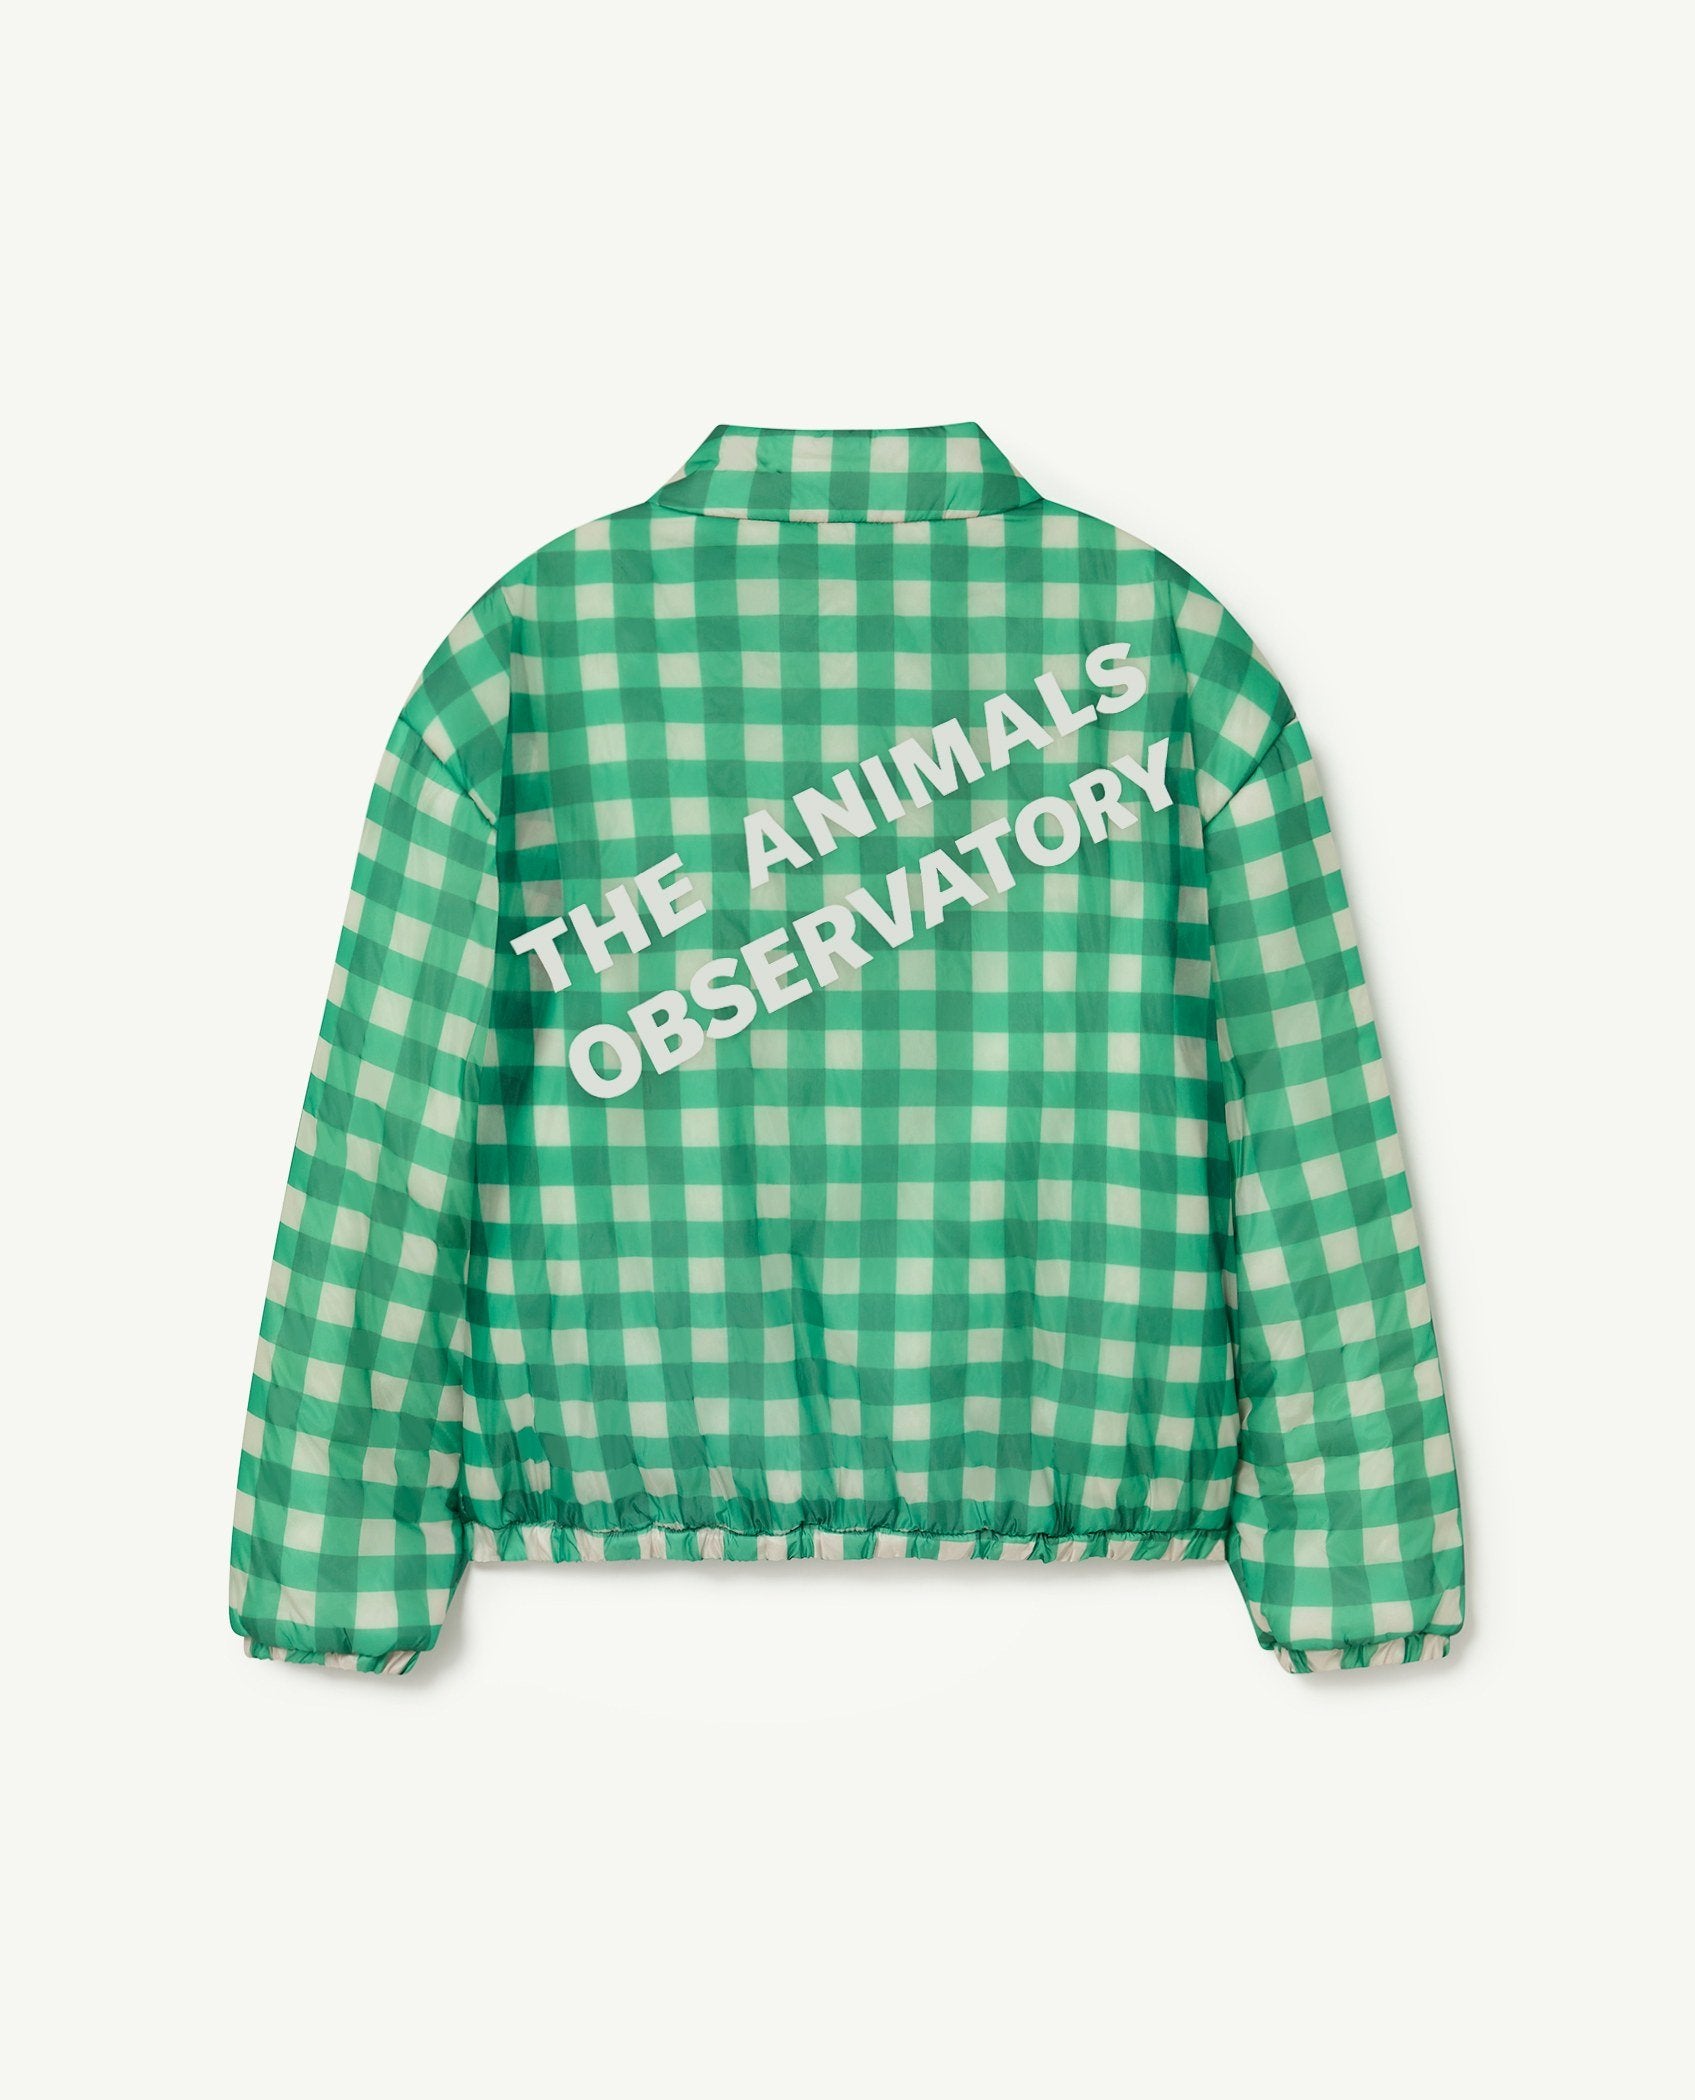 Green Crocodile Kids Jacket PRODUCT BACK